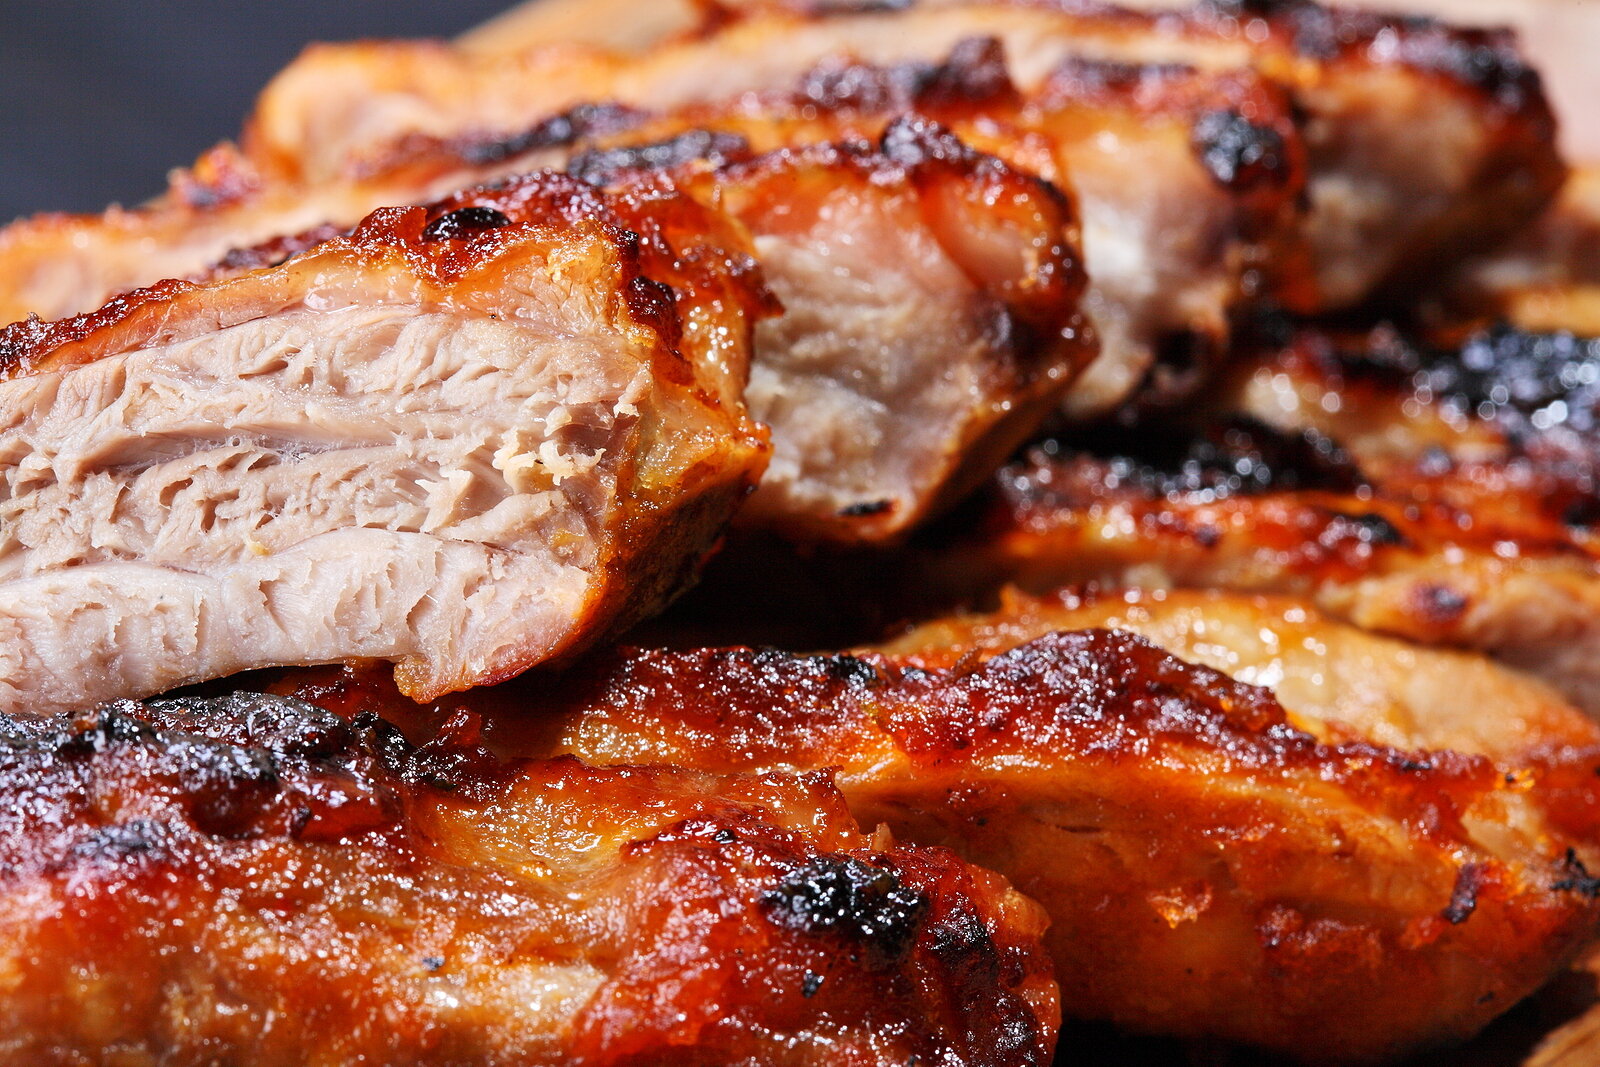 bigstock-Grilled-pork-ribs-on-wooden-pl-26070863.jpg